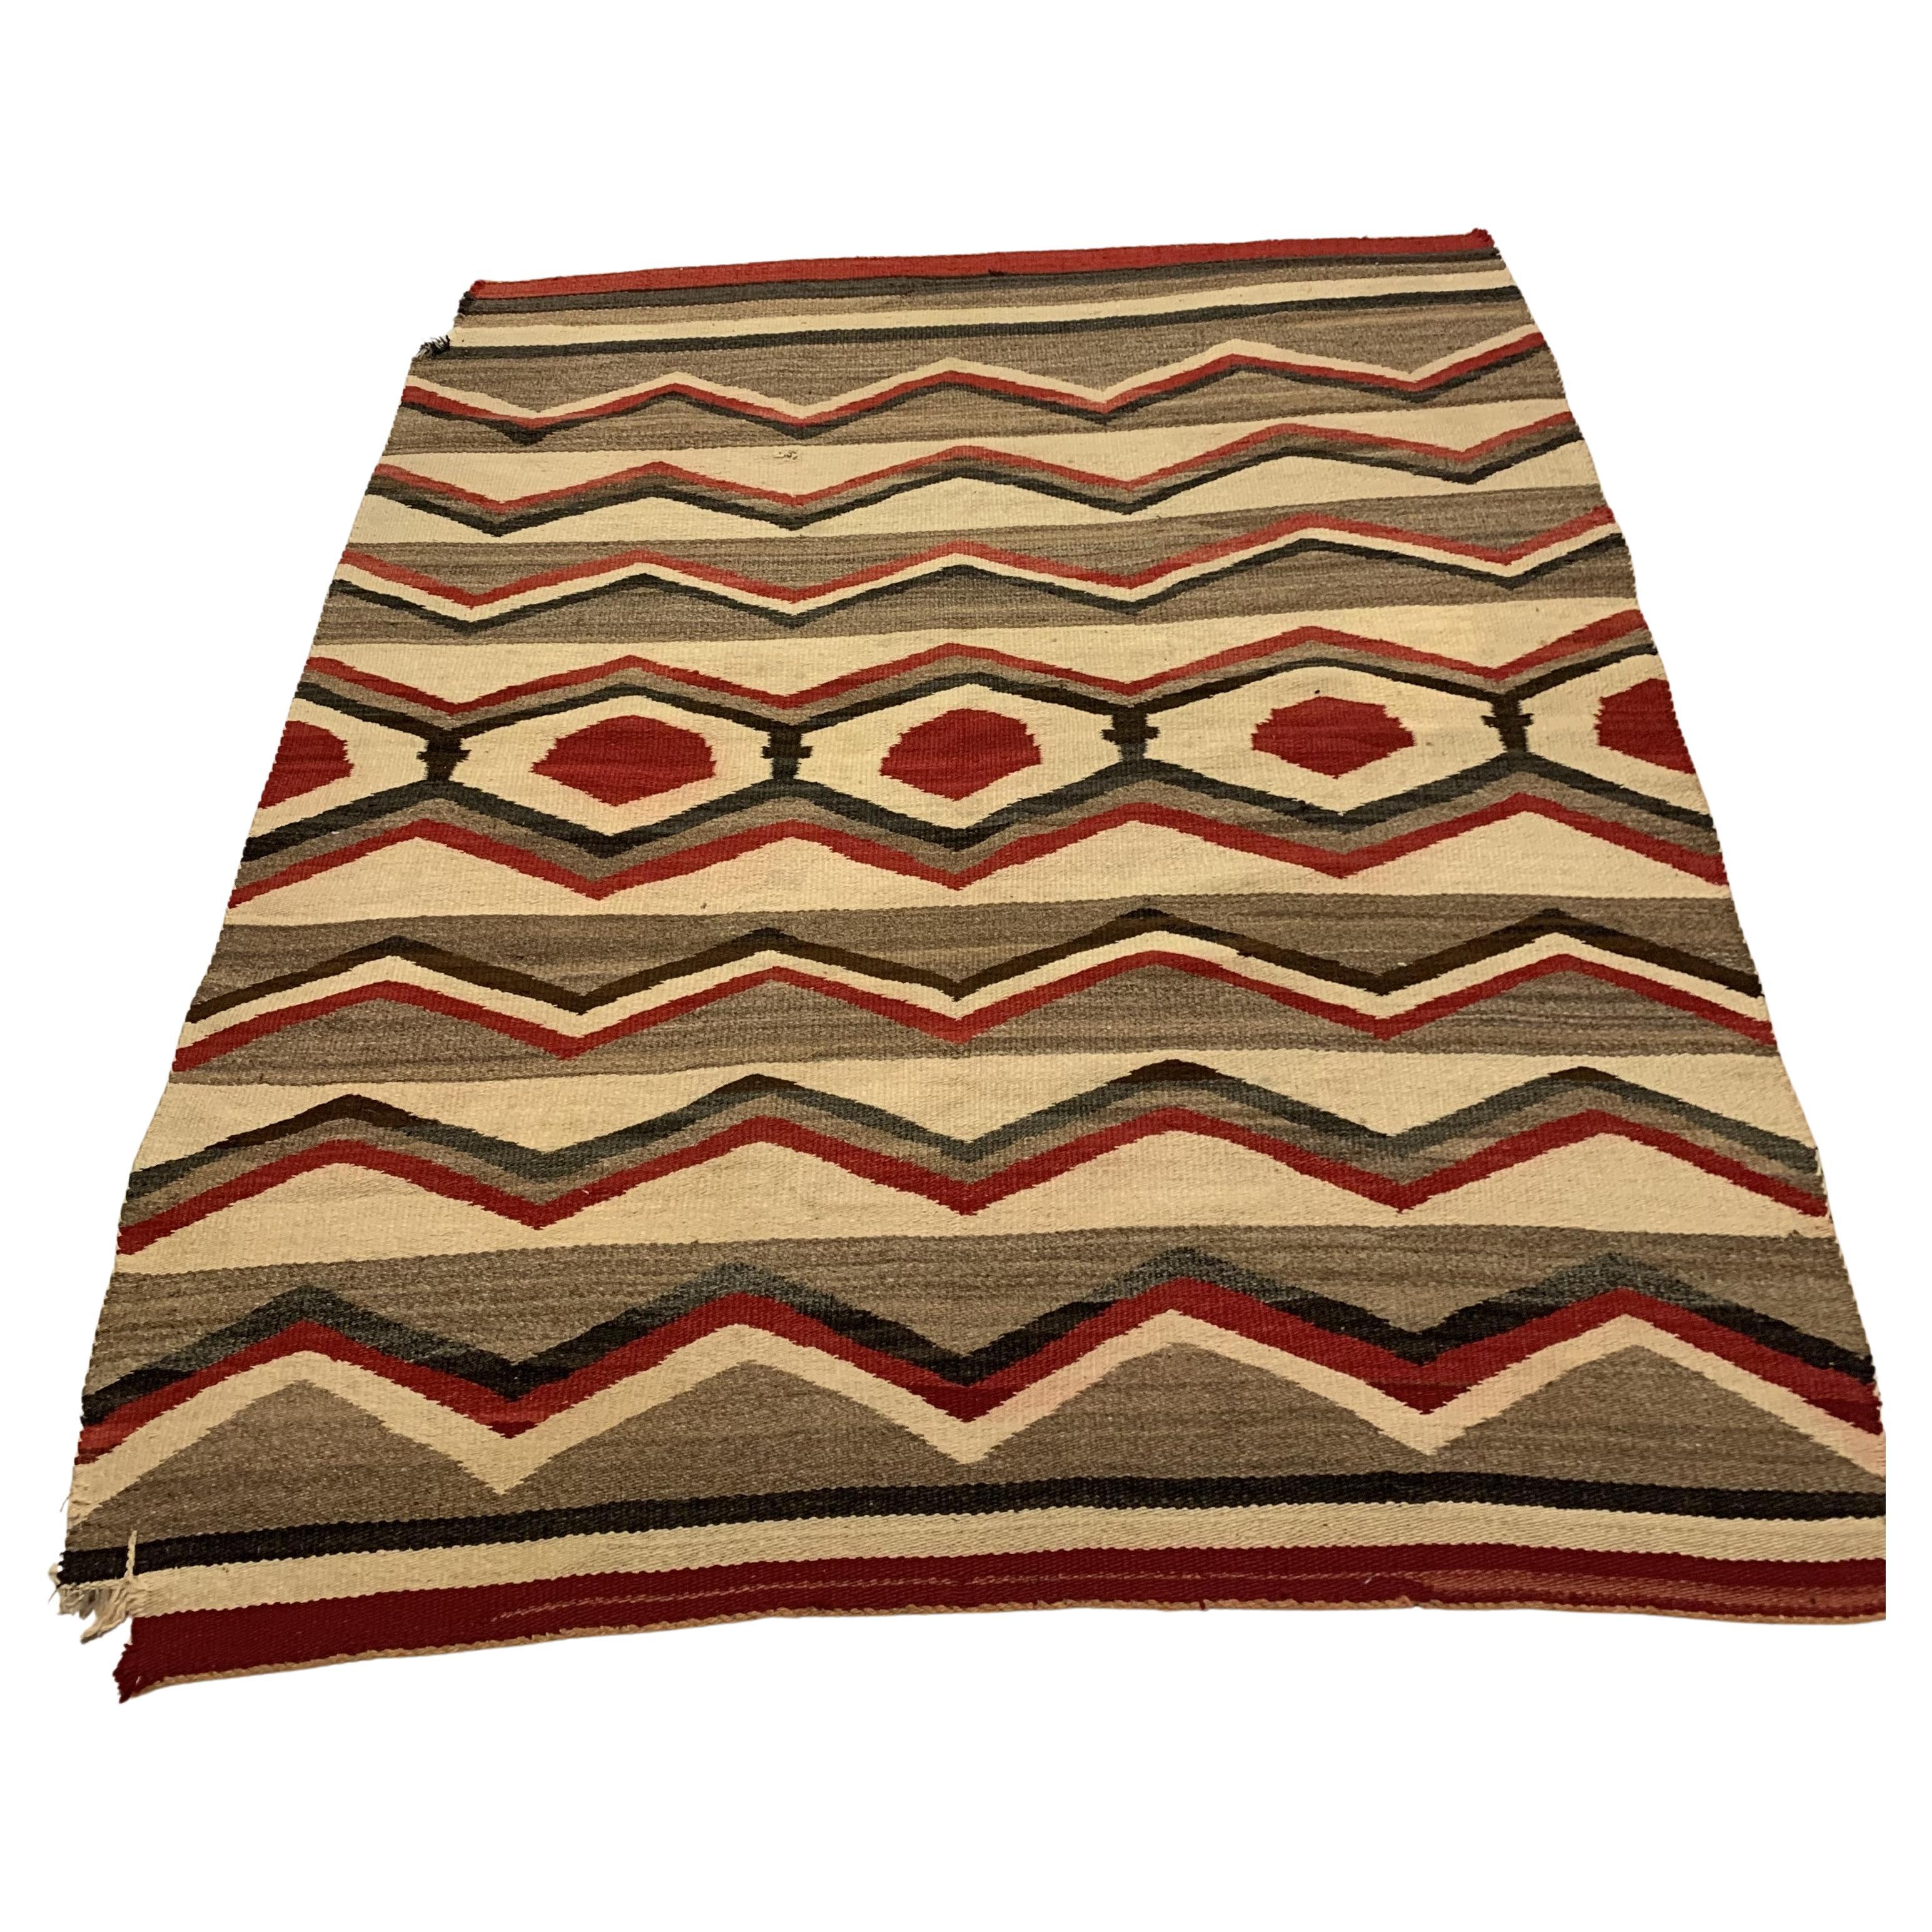 Handmade Antique Native American Navajo Rug Blanket 4.6' x 5.4', 1900s - 2B22 For Sale